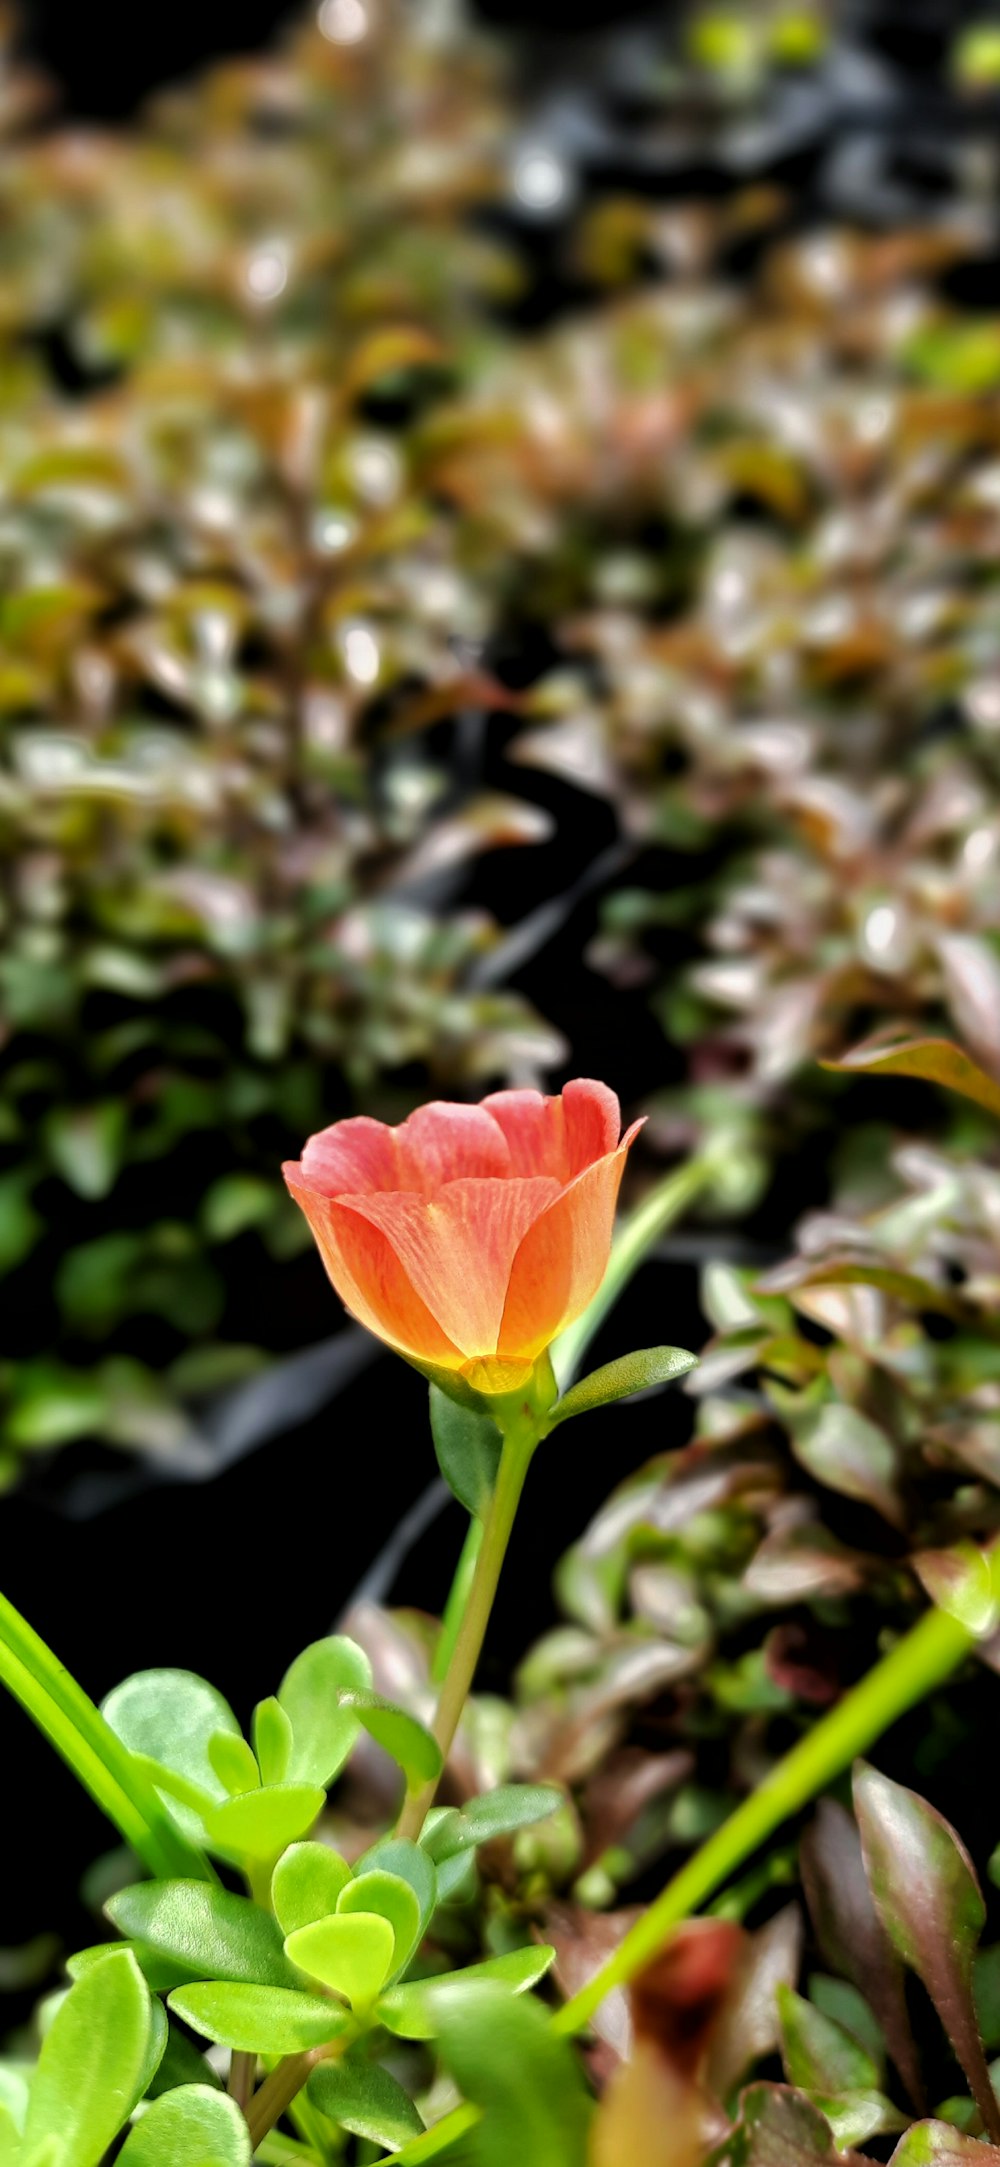 a close up of a flower